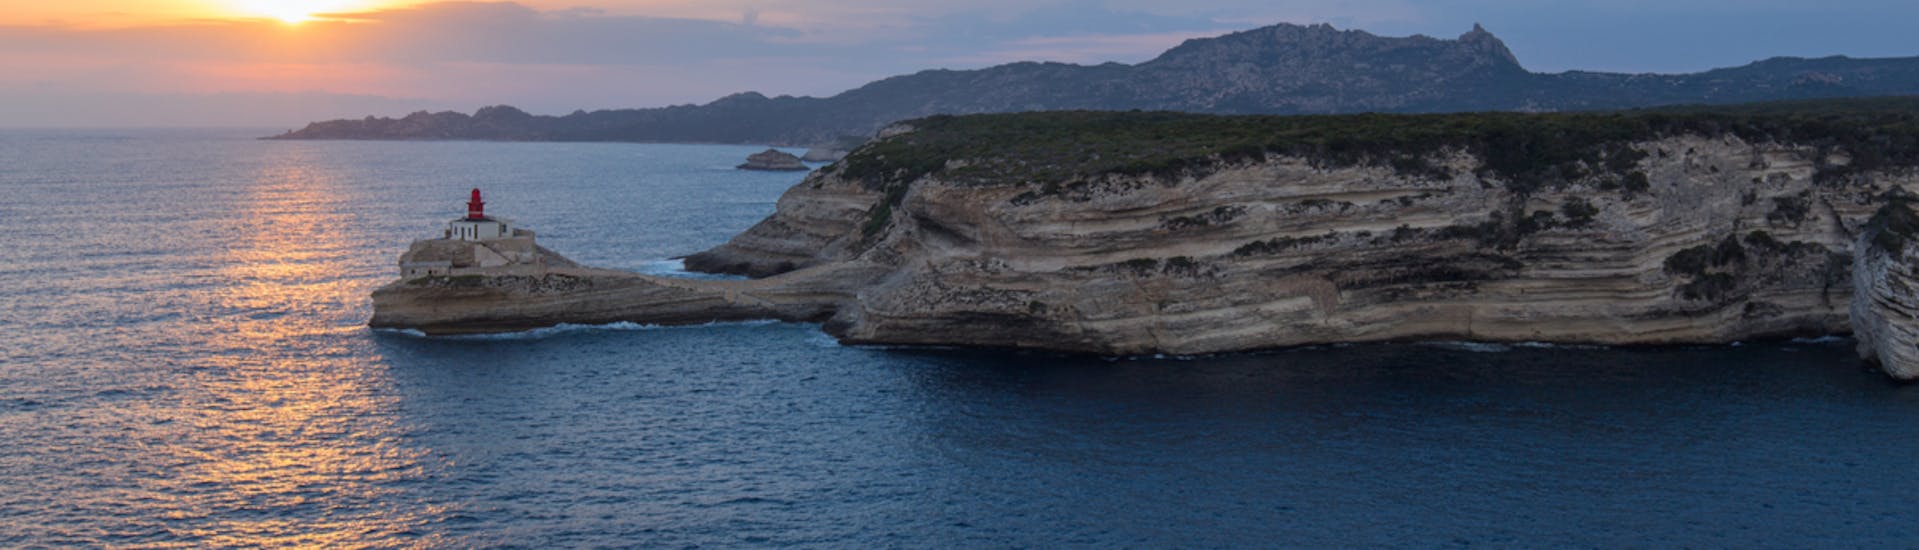 View of the Corsican coast during the boat trip from Ajaccio and Porticcio to Bonifacio with Nave Va Promenades en mer.